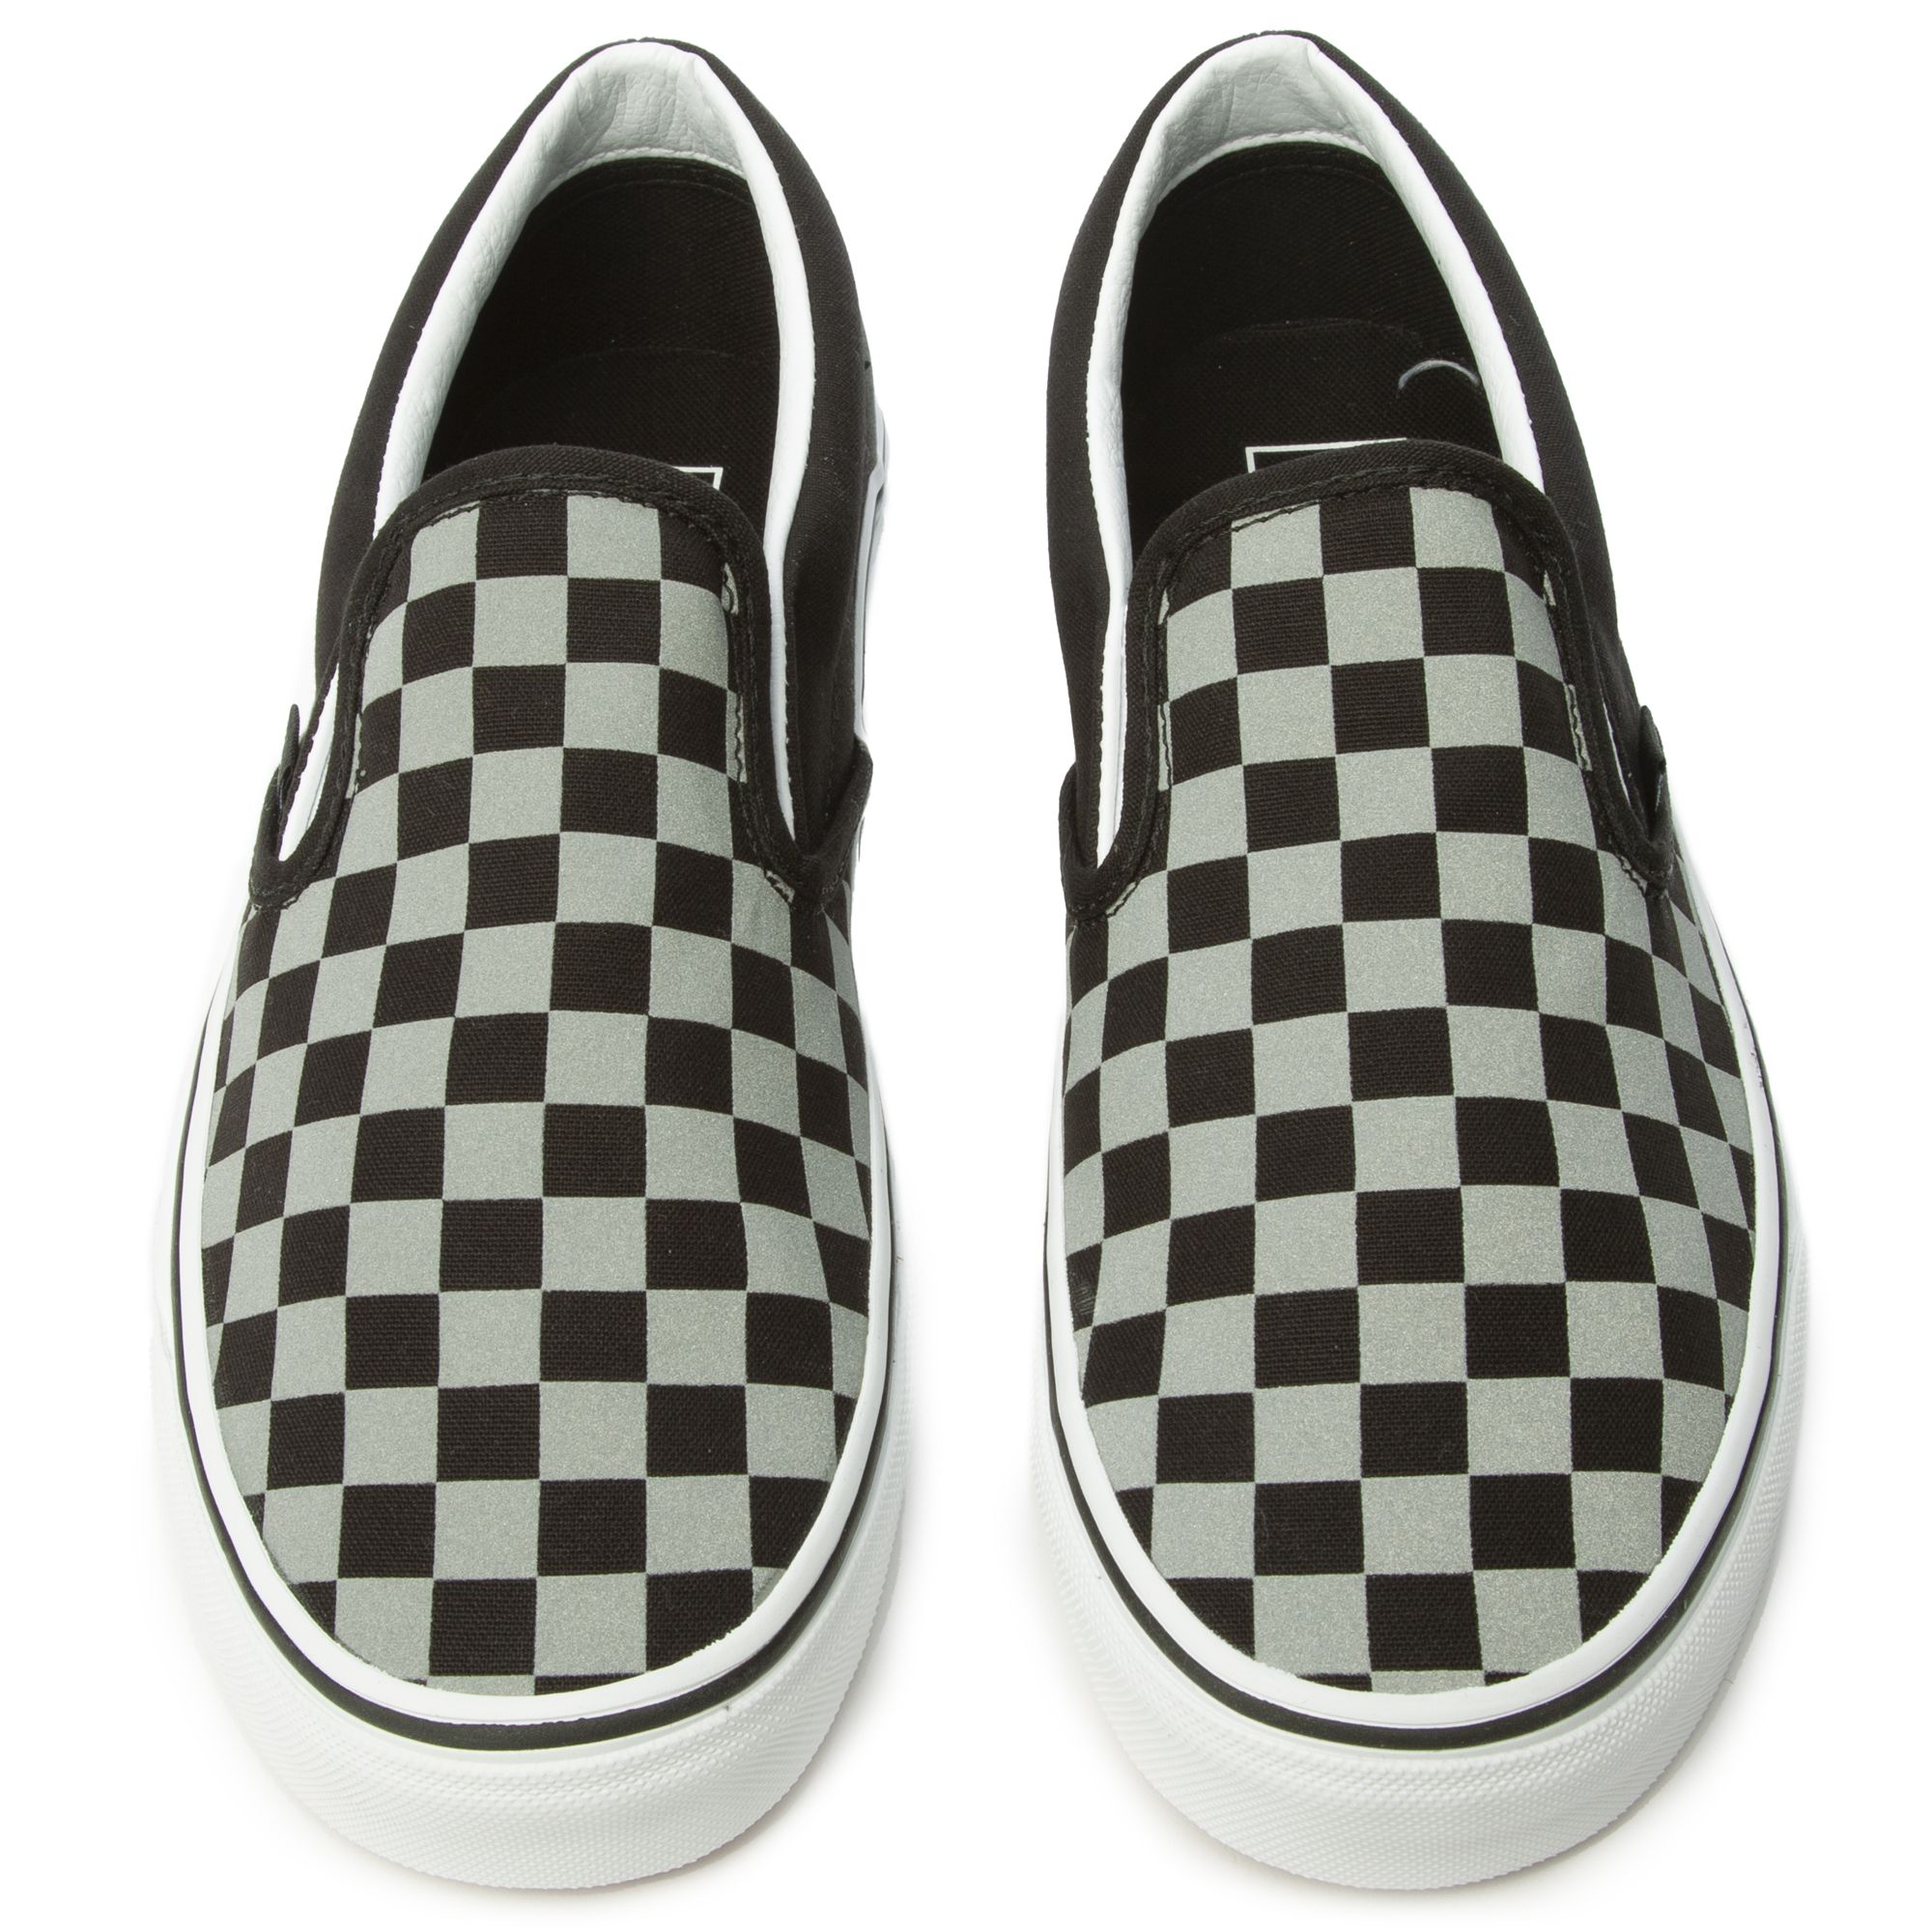 Reflective LV Checkered Slip-On Vans